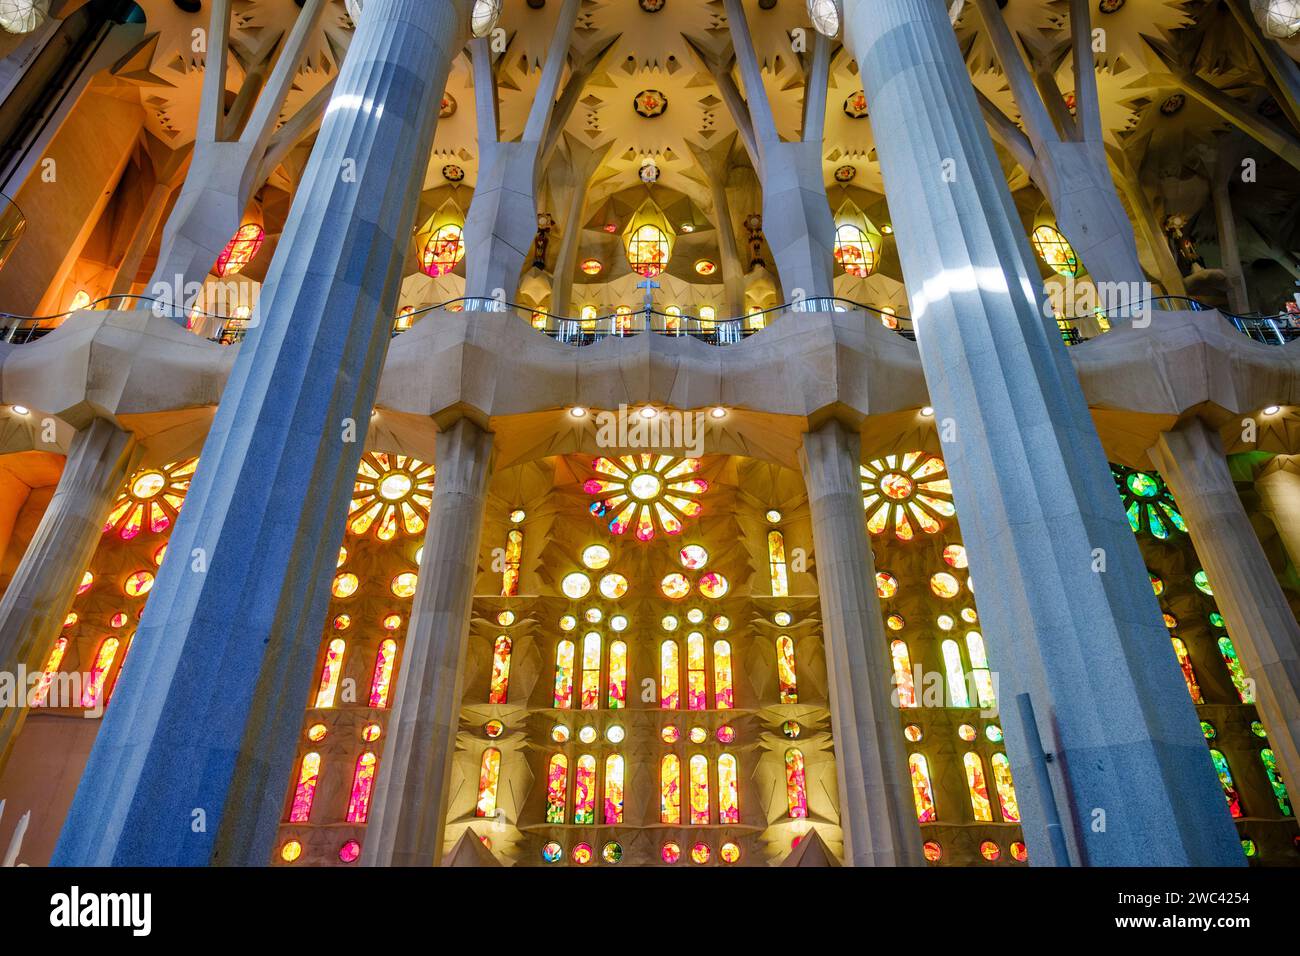 Interior low angle view of light shining through designed stained glass windows inside Basilica La Sagrada Familia, by Antoni Gaudí, Barcelona, Spain Stock Photo